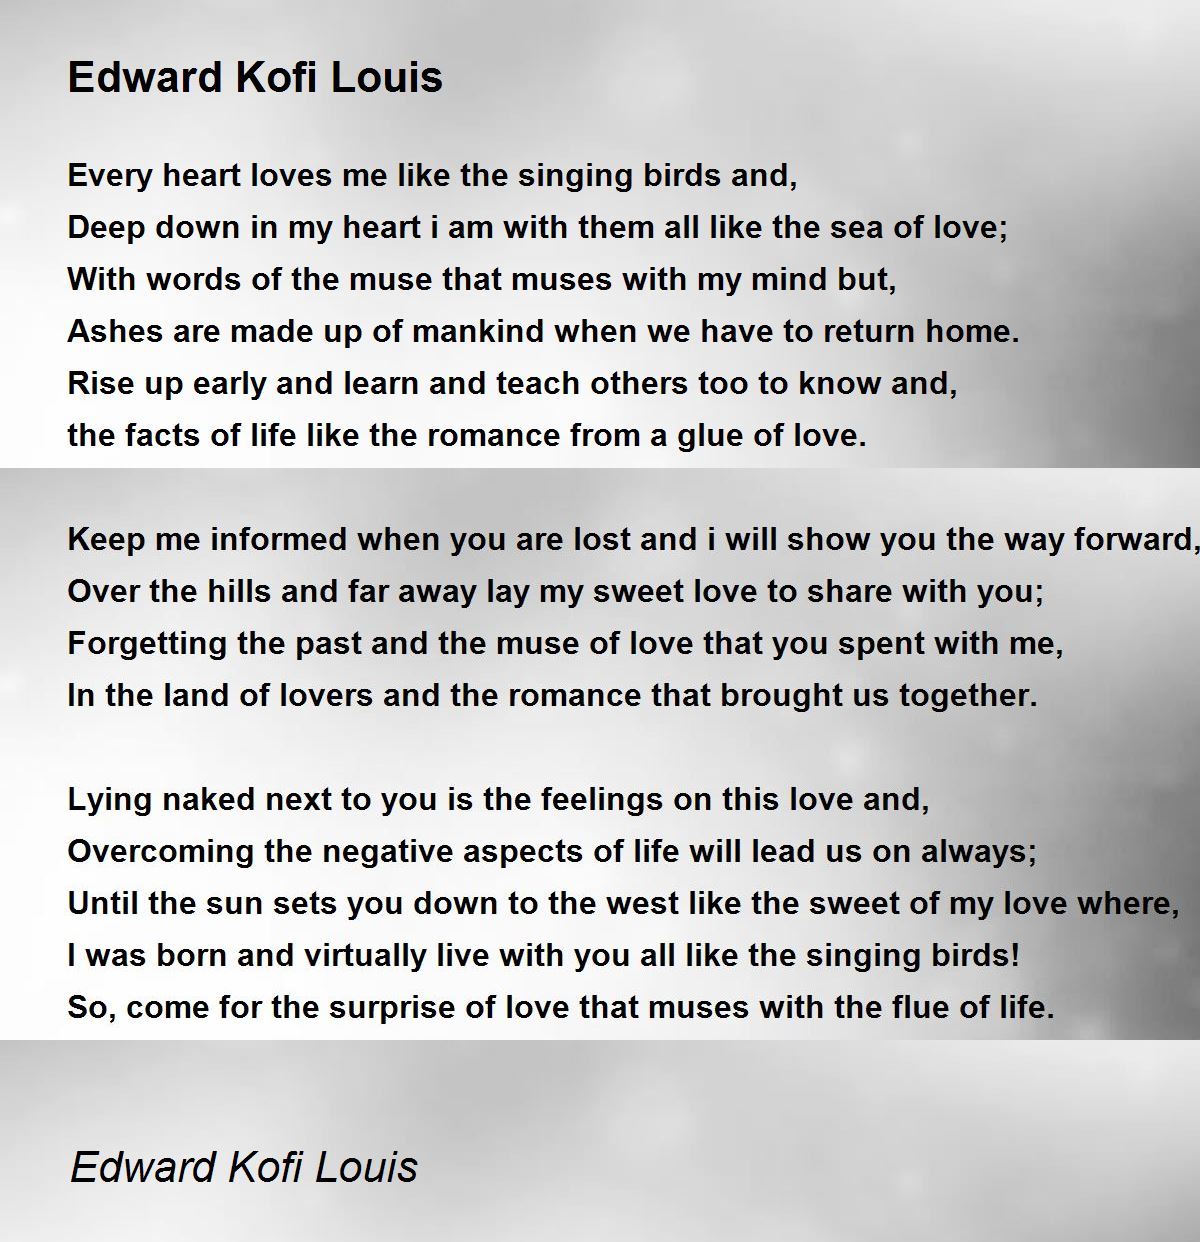 Love Kingdom - Love Kingdom Poem by Edward Kofi Louis